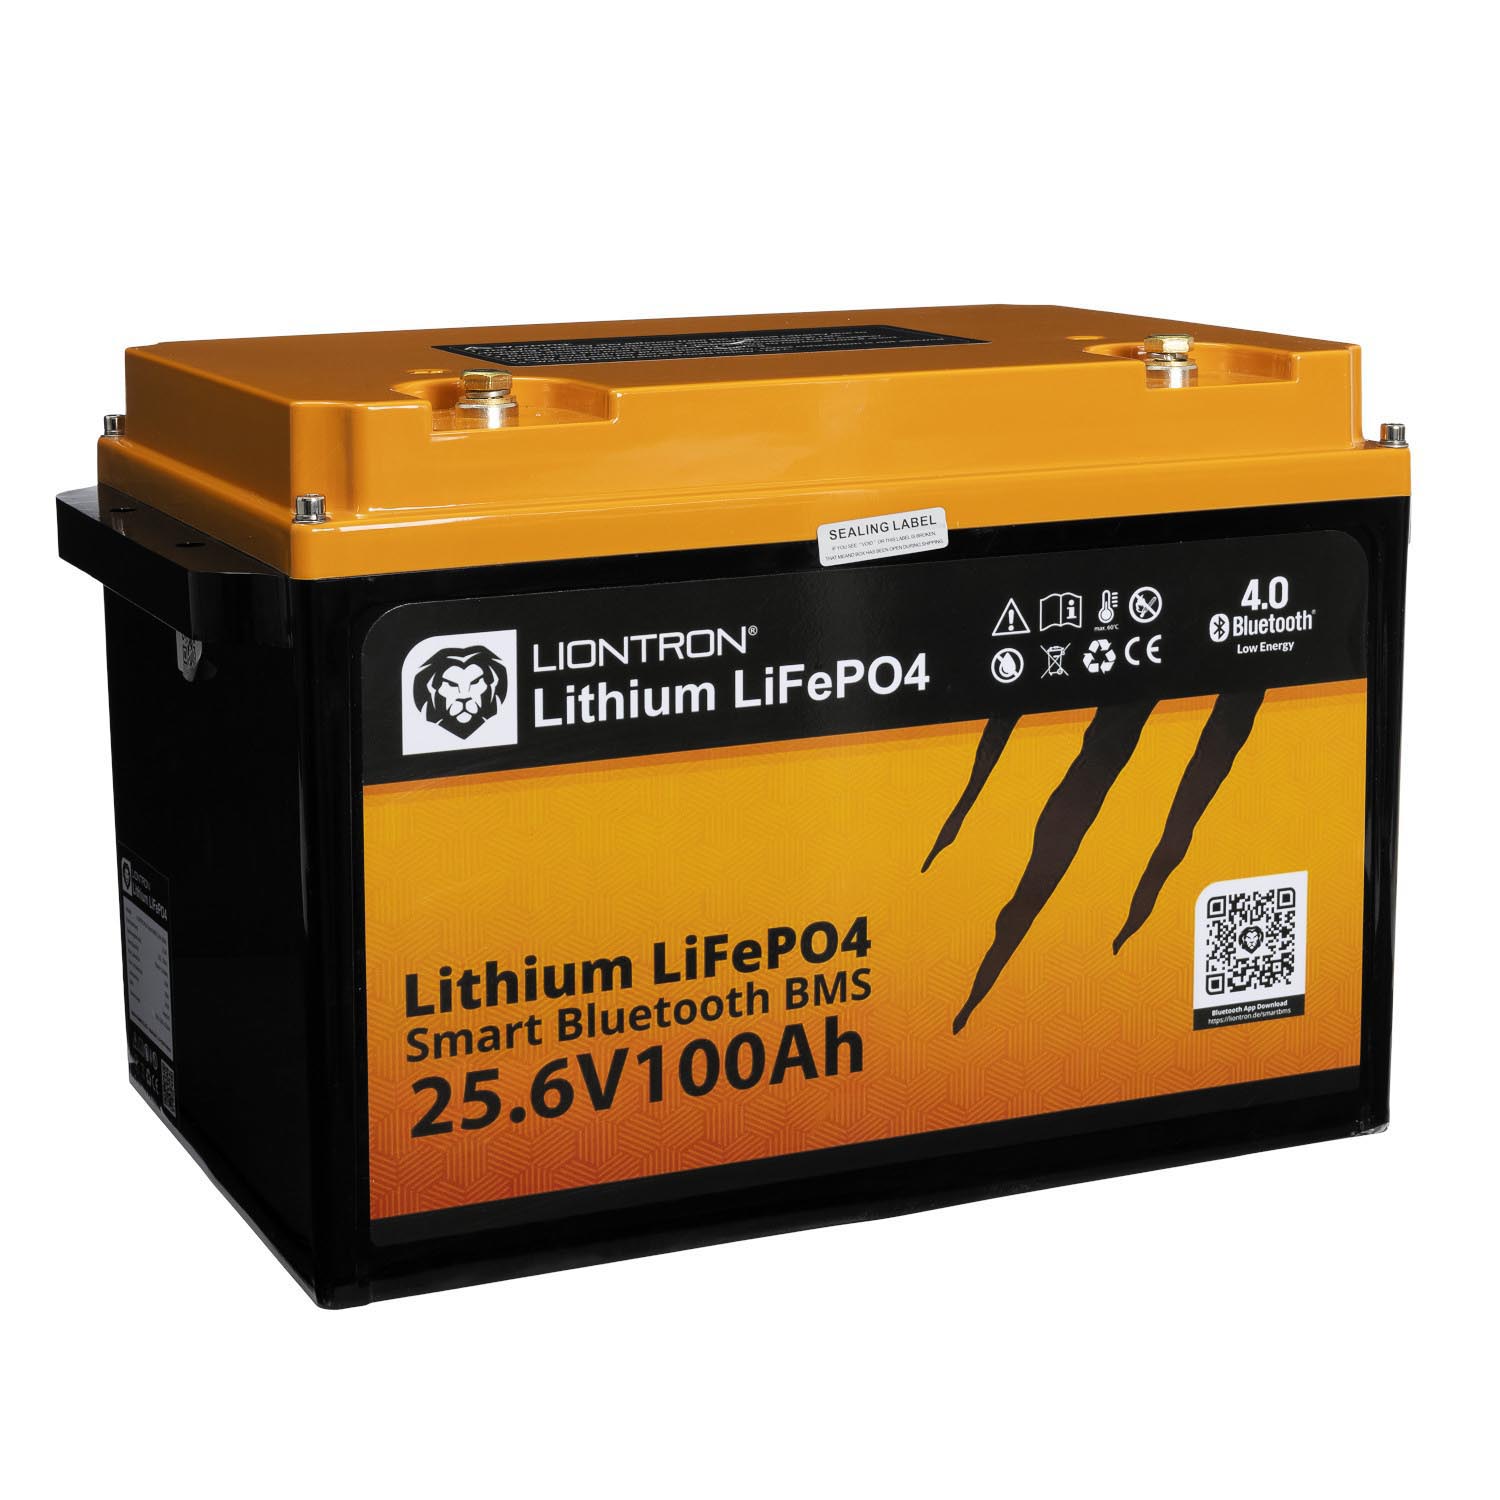 Liontron 100Ah 25,6V LiFePO4 Lithium Batterie BMS Bluetooth mit App Arctic und Marine